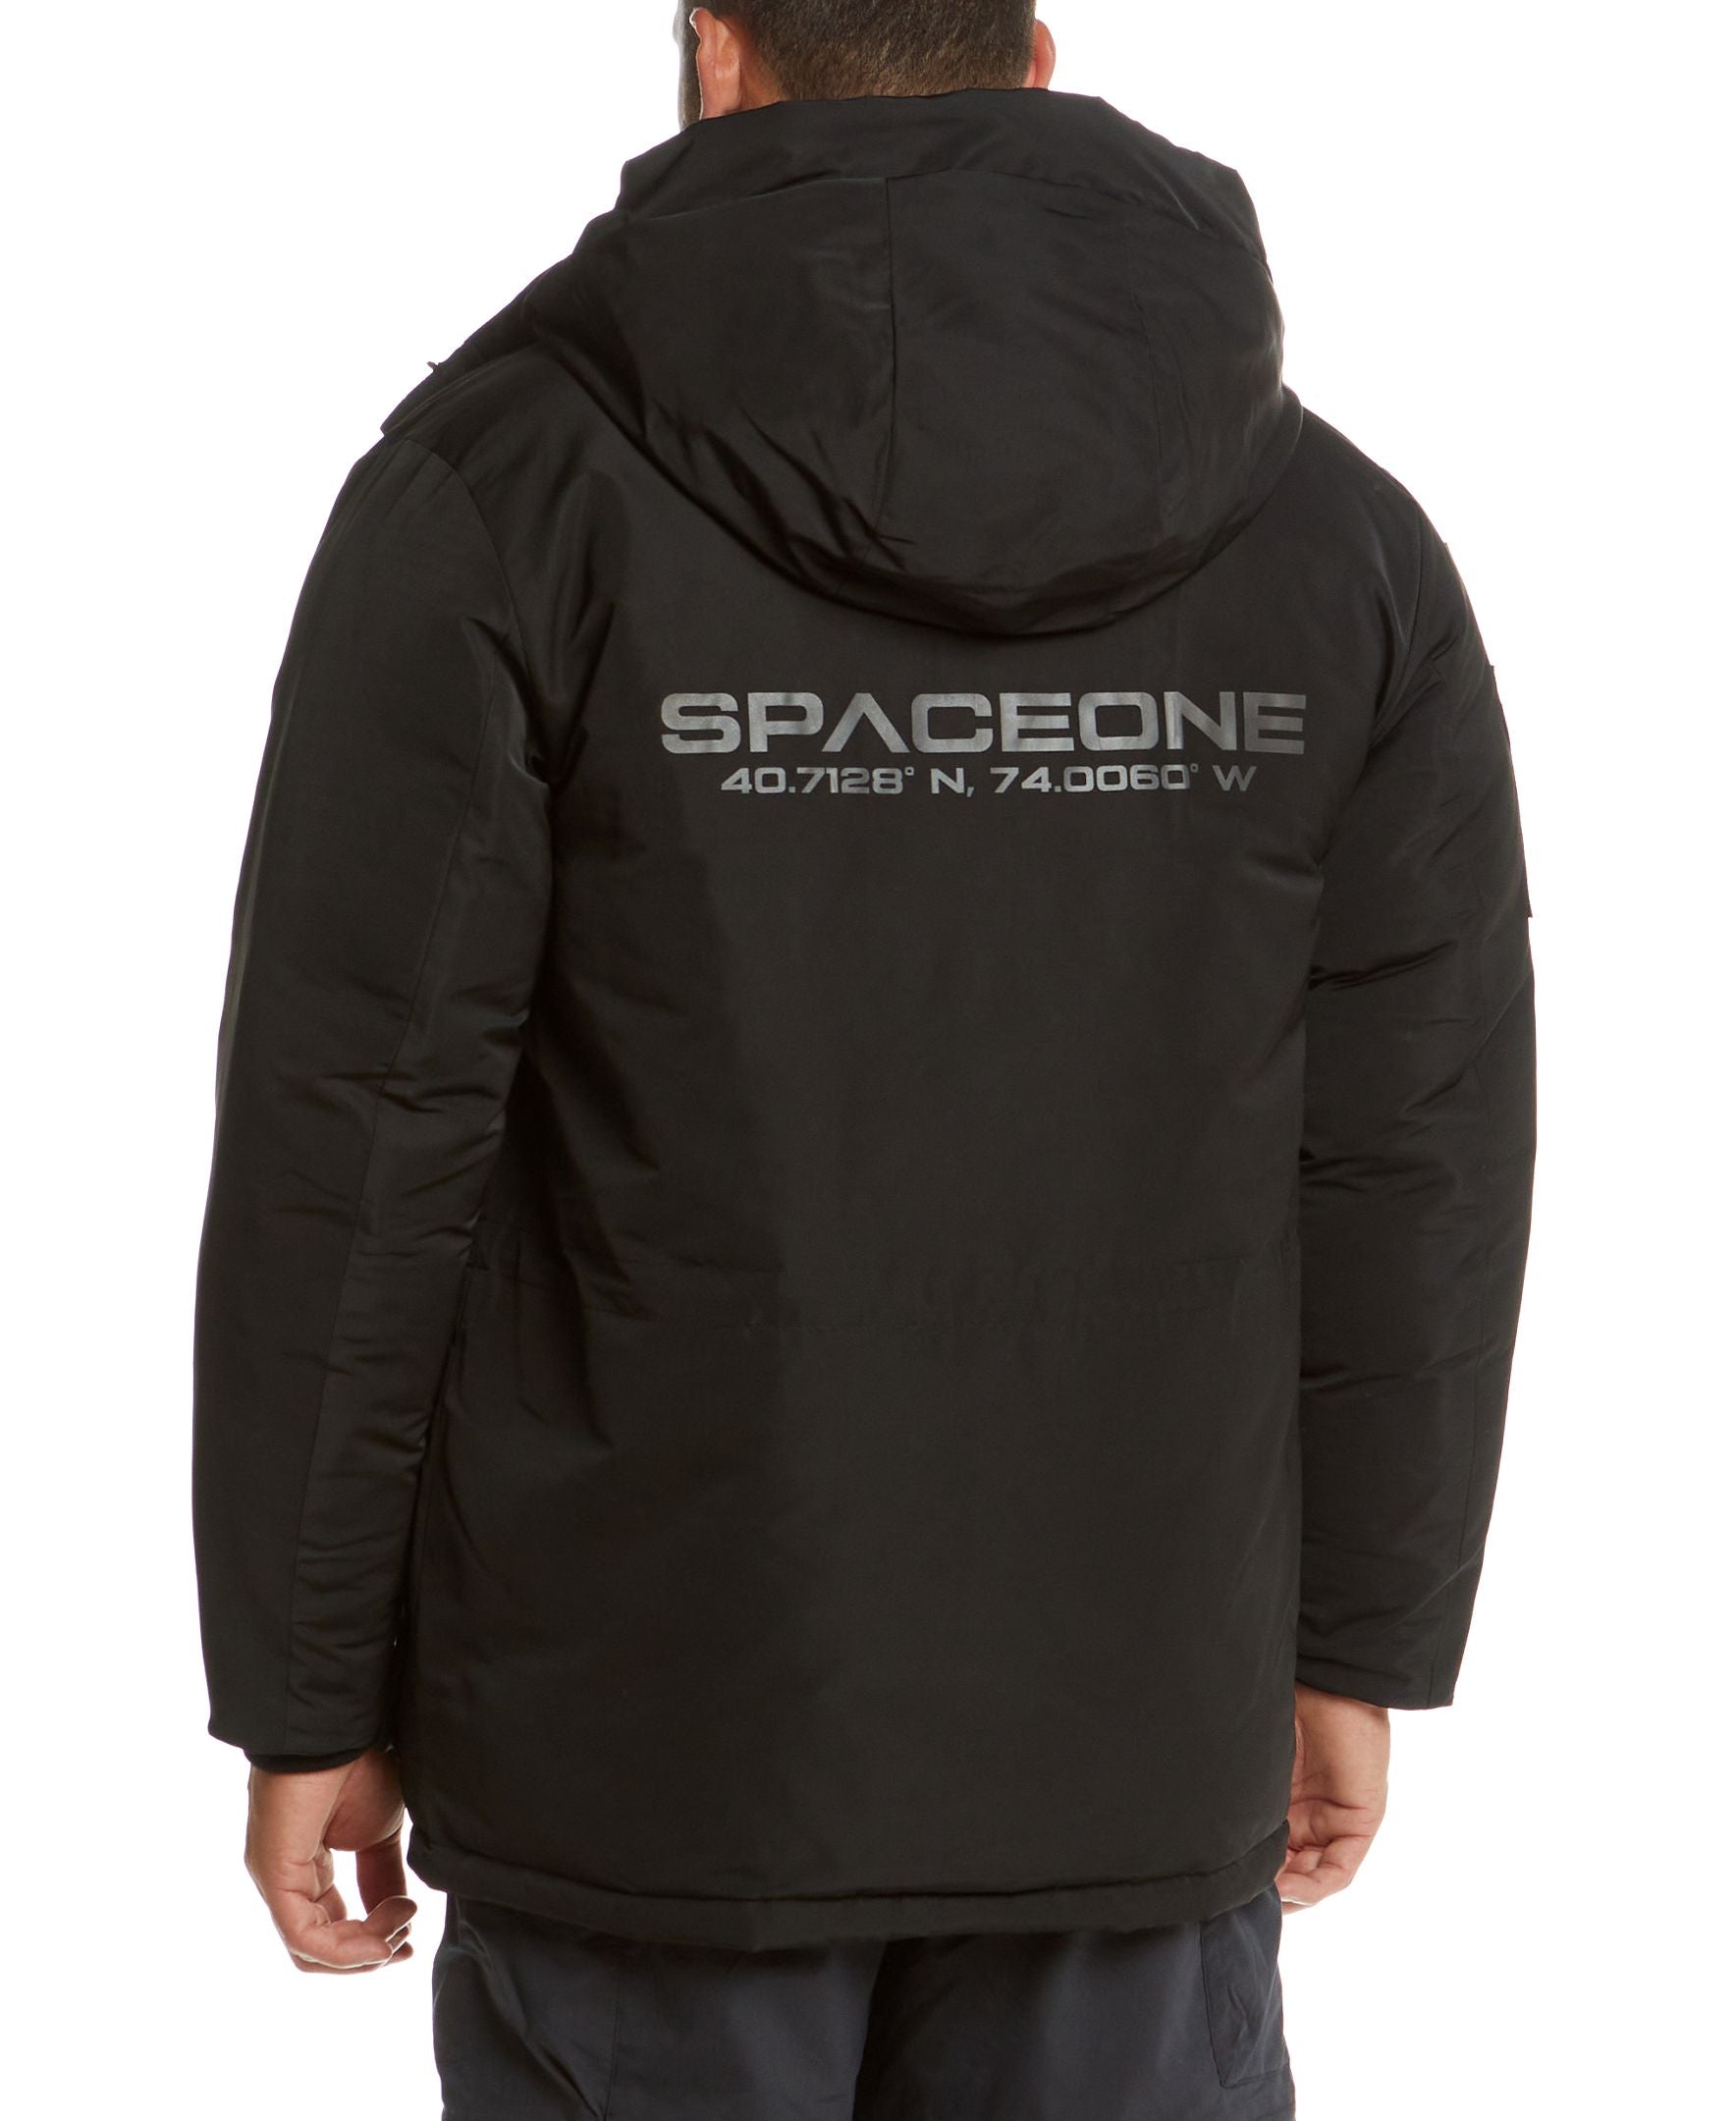 Mars Expedition Jacket